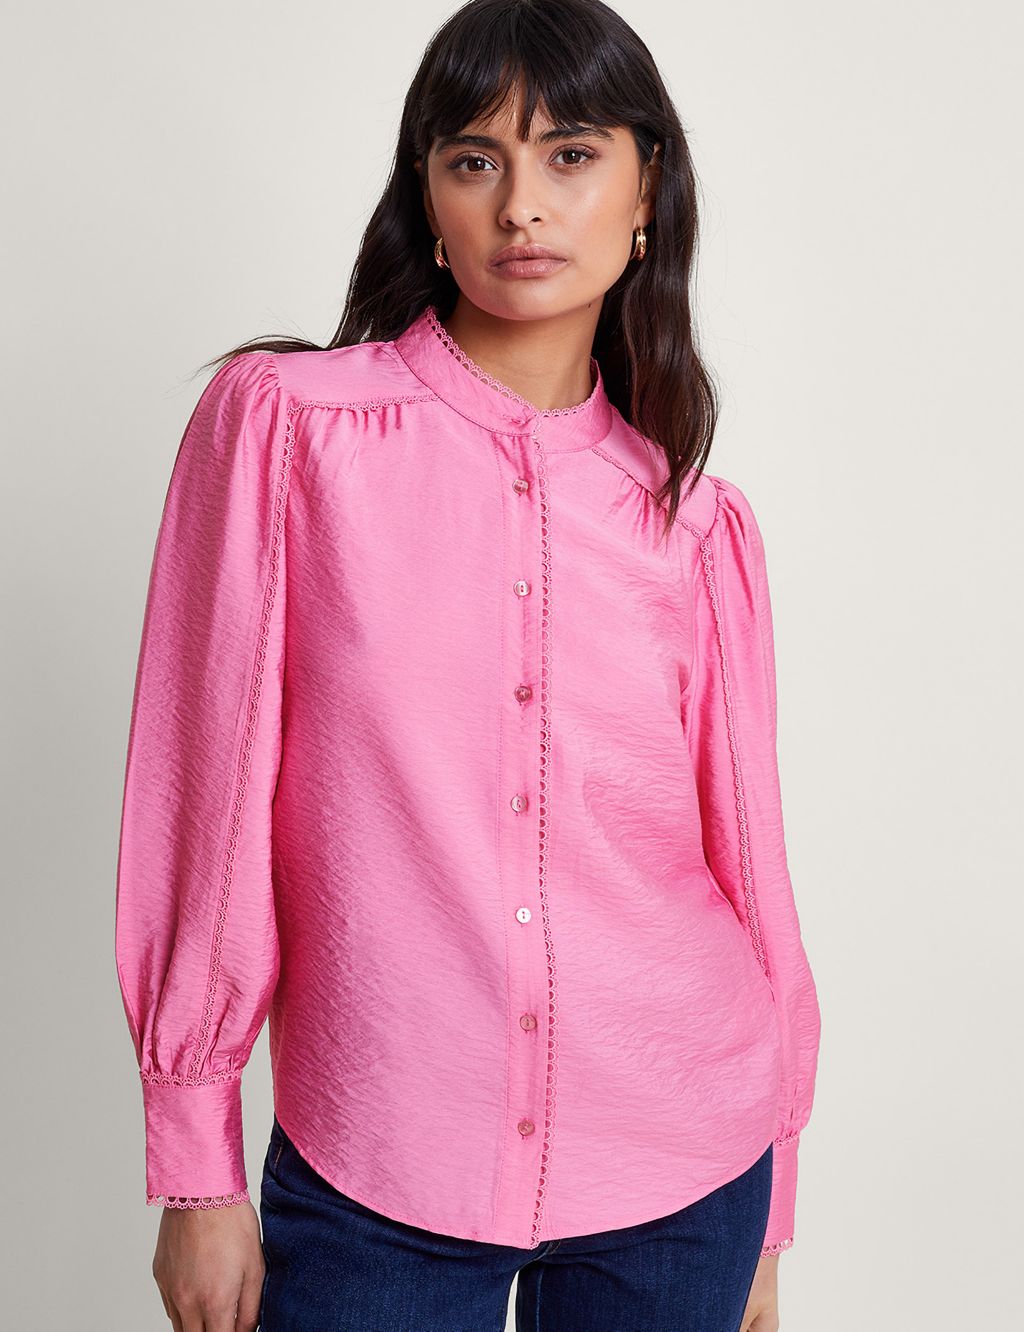 Women's Pink Shirts & Blouses | M&S